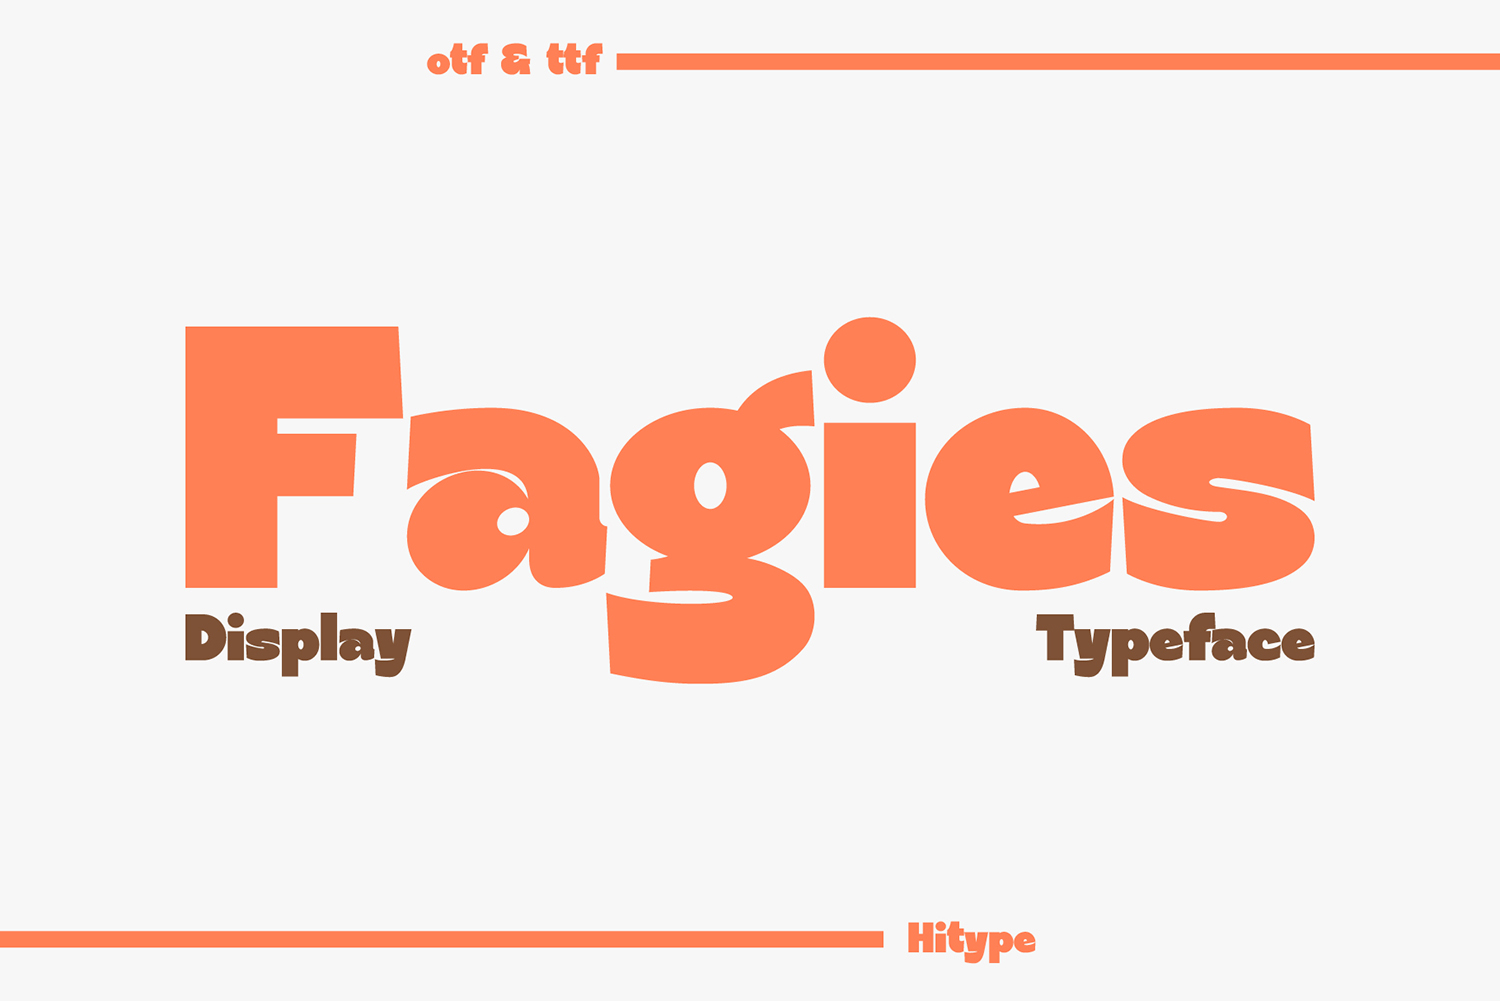 Fagies Free Font